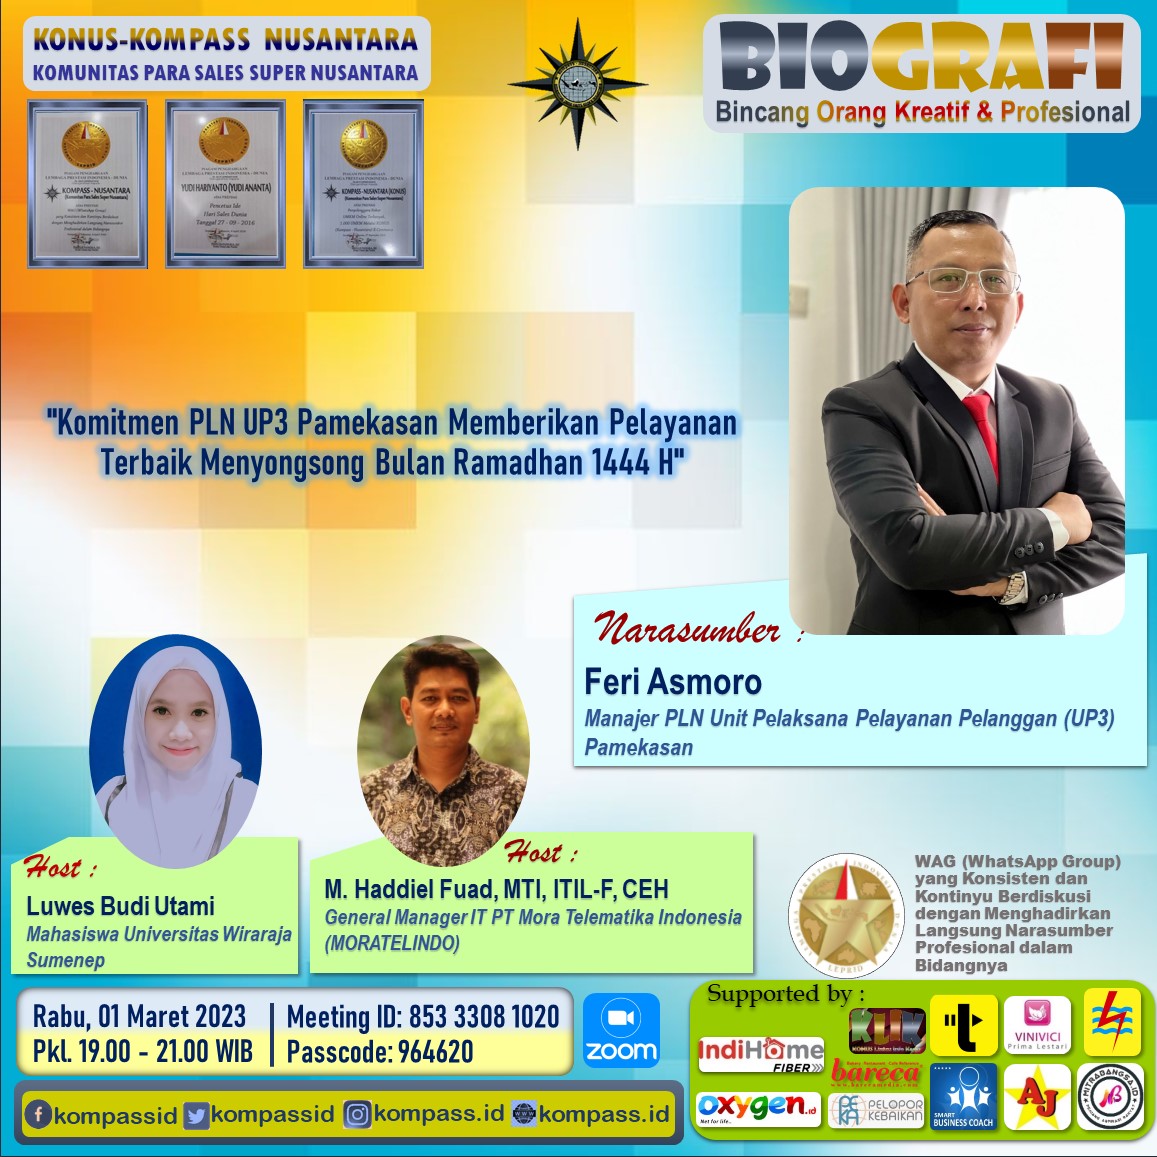 Program BIOGRAFI KOMPASS Nusantara 01 Maret 2023 by Co-founder Muhammad Idham Azhari